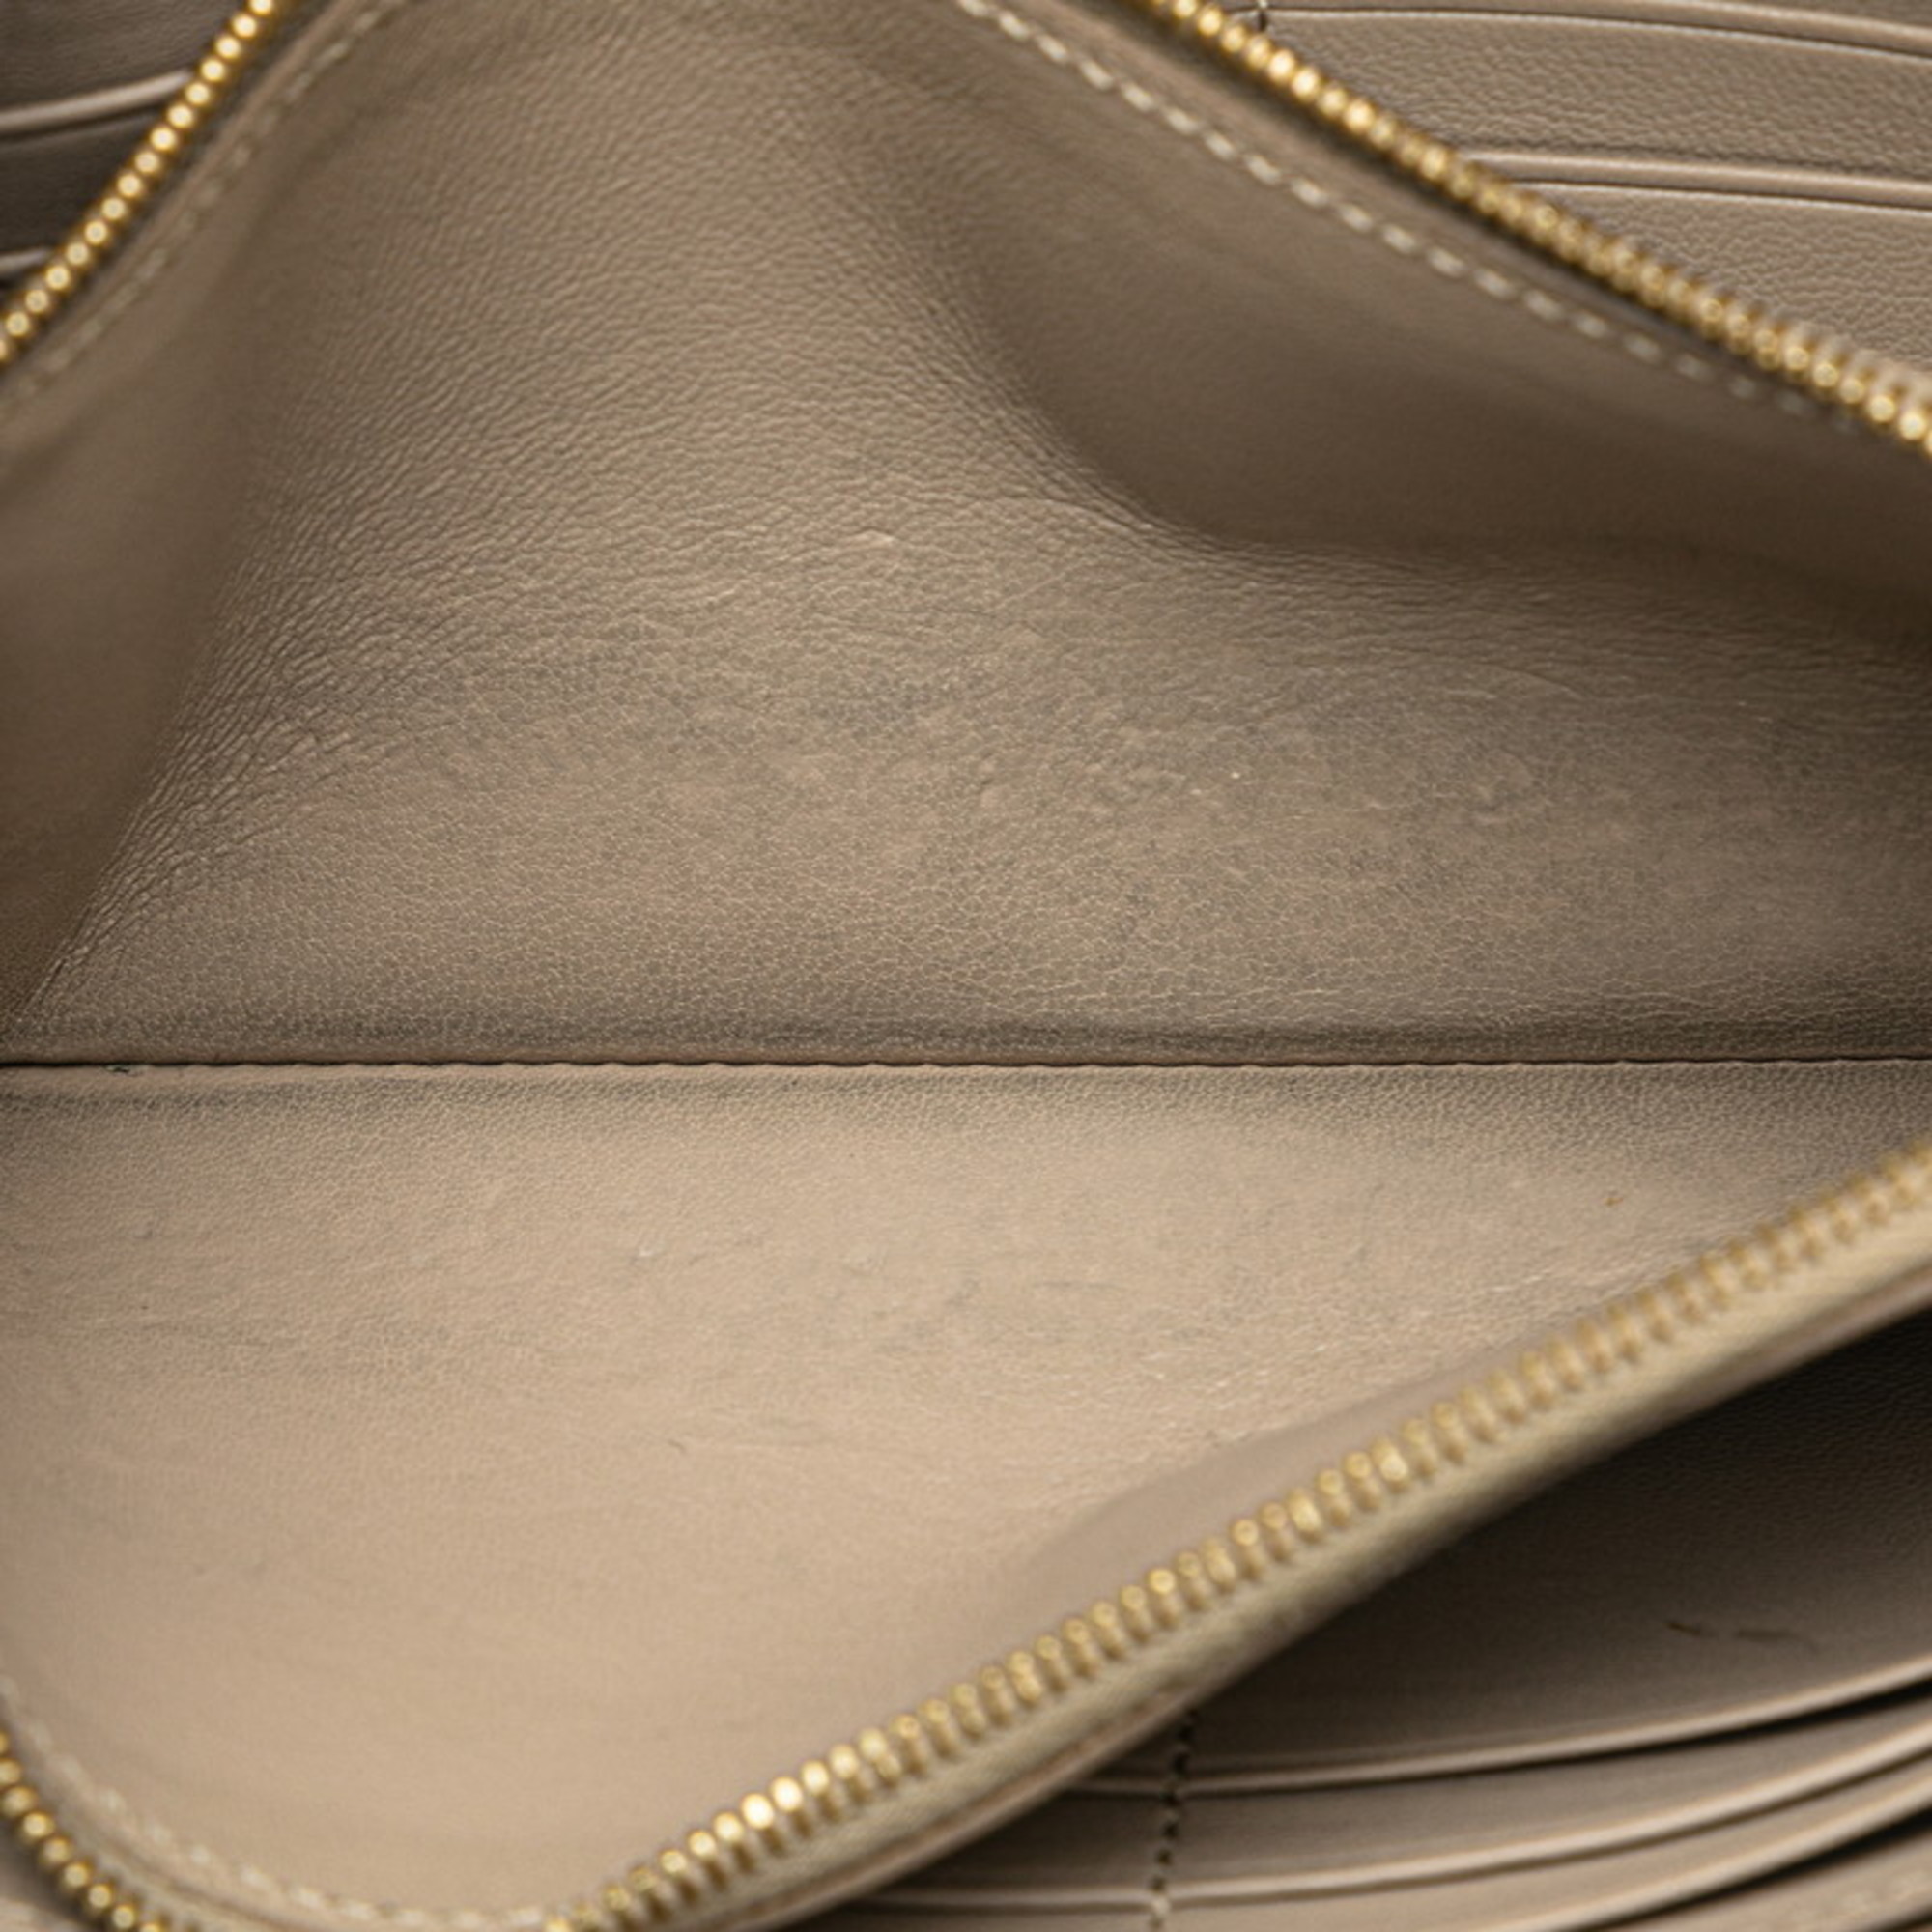 CELINE Large Flap Multi-Function Long Wallet Blue Leather Women's